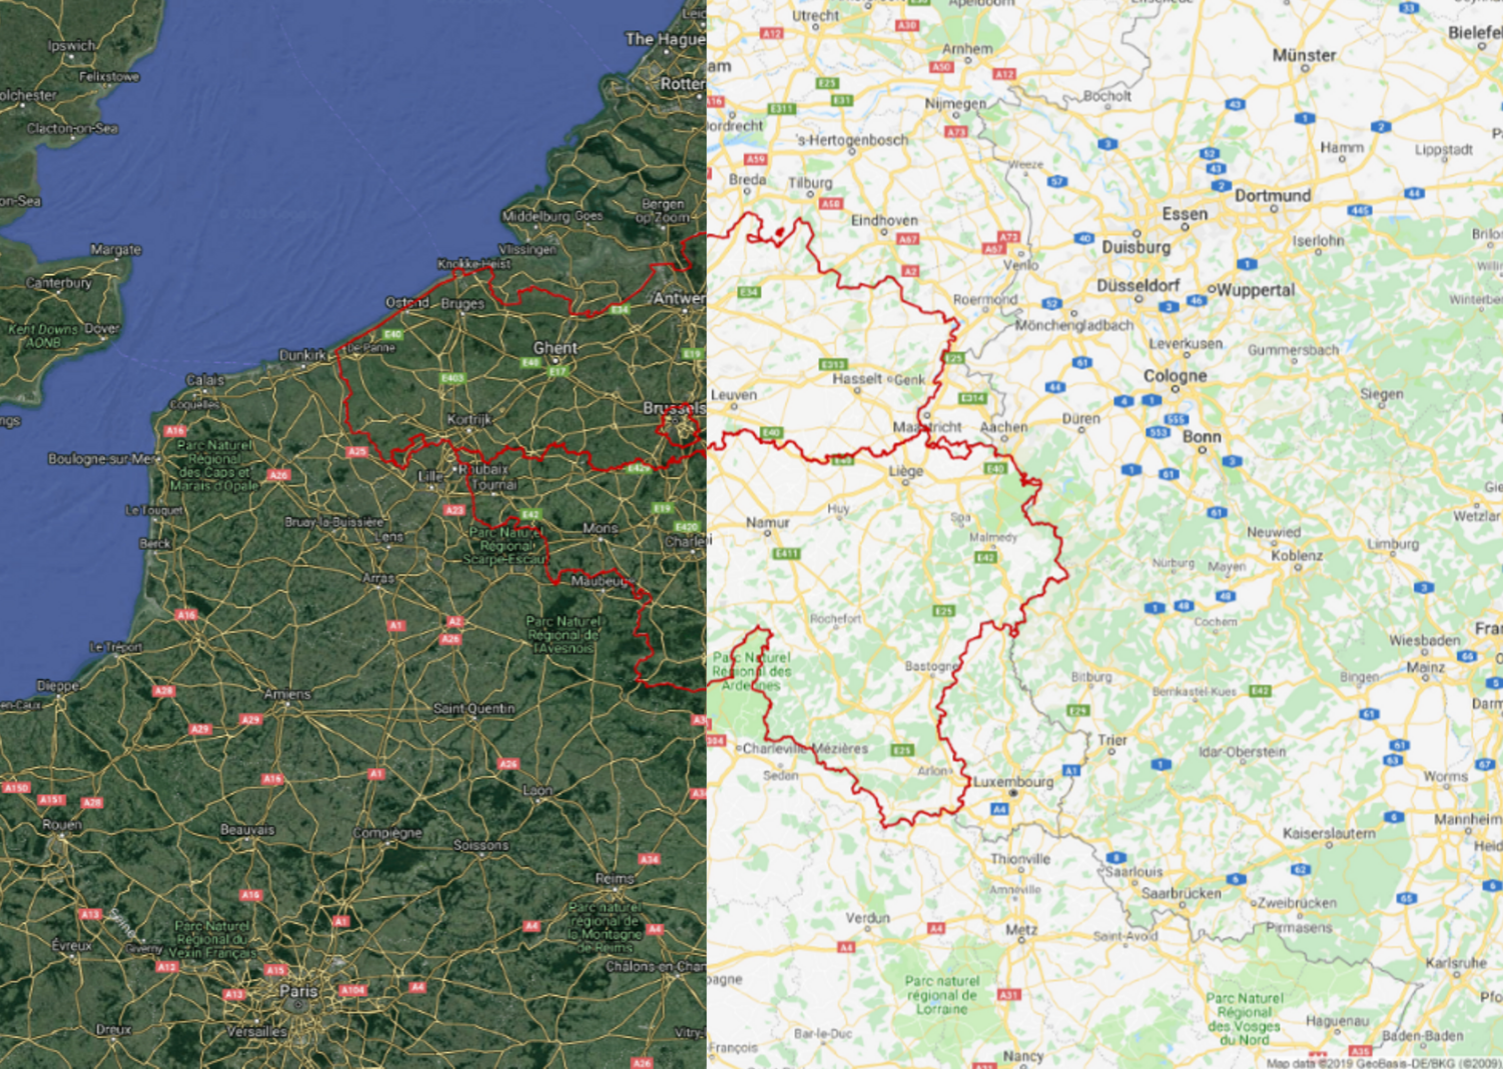 The Belgian Region Boundaries